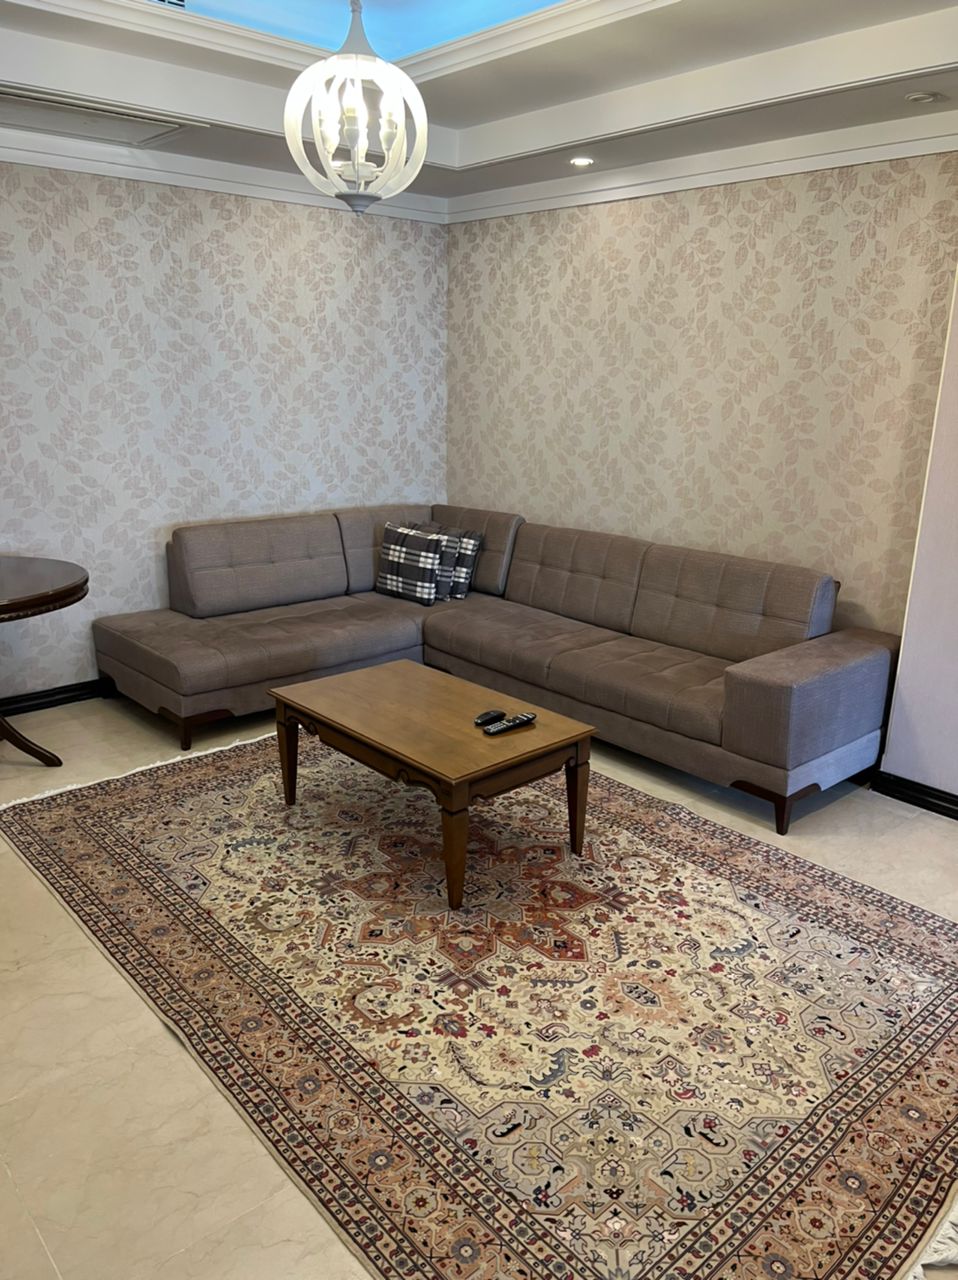 Rent Apartment In Tehran Zafaraniyeh Code 1570-3Rent Apartment In Tehran Zafaraniyeh Code 1570-14